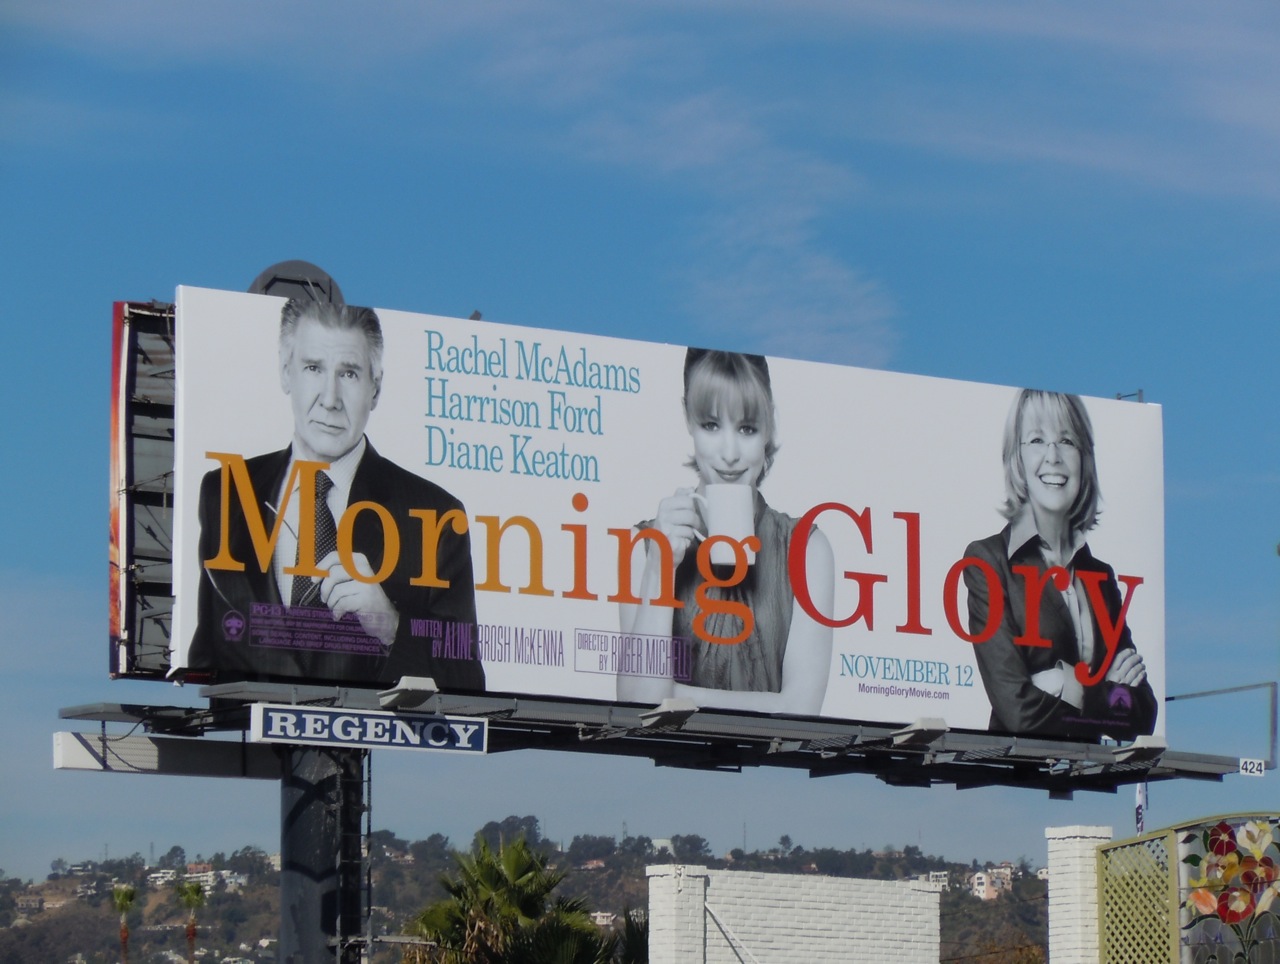 https://blogger.googleusercontent.com/img/b/R29vZ2xl/AVvXsEjCNZaqVrWVYZ6kmvI2FzDswSmMTVueymsmccyJZMcRBBzQ6iLTbwNo1FKU5XyxwWGvdblVGAAYewlk2QP58nBkYqrCMbAaTITuZnmTuWlM1JBTC44jI3fG6nHoO9Nac1scZWhpTAzCLWSb/s1600/Morning+Glory+movie+billboard.jpg